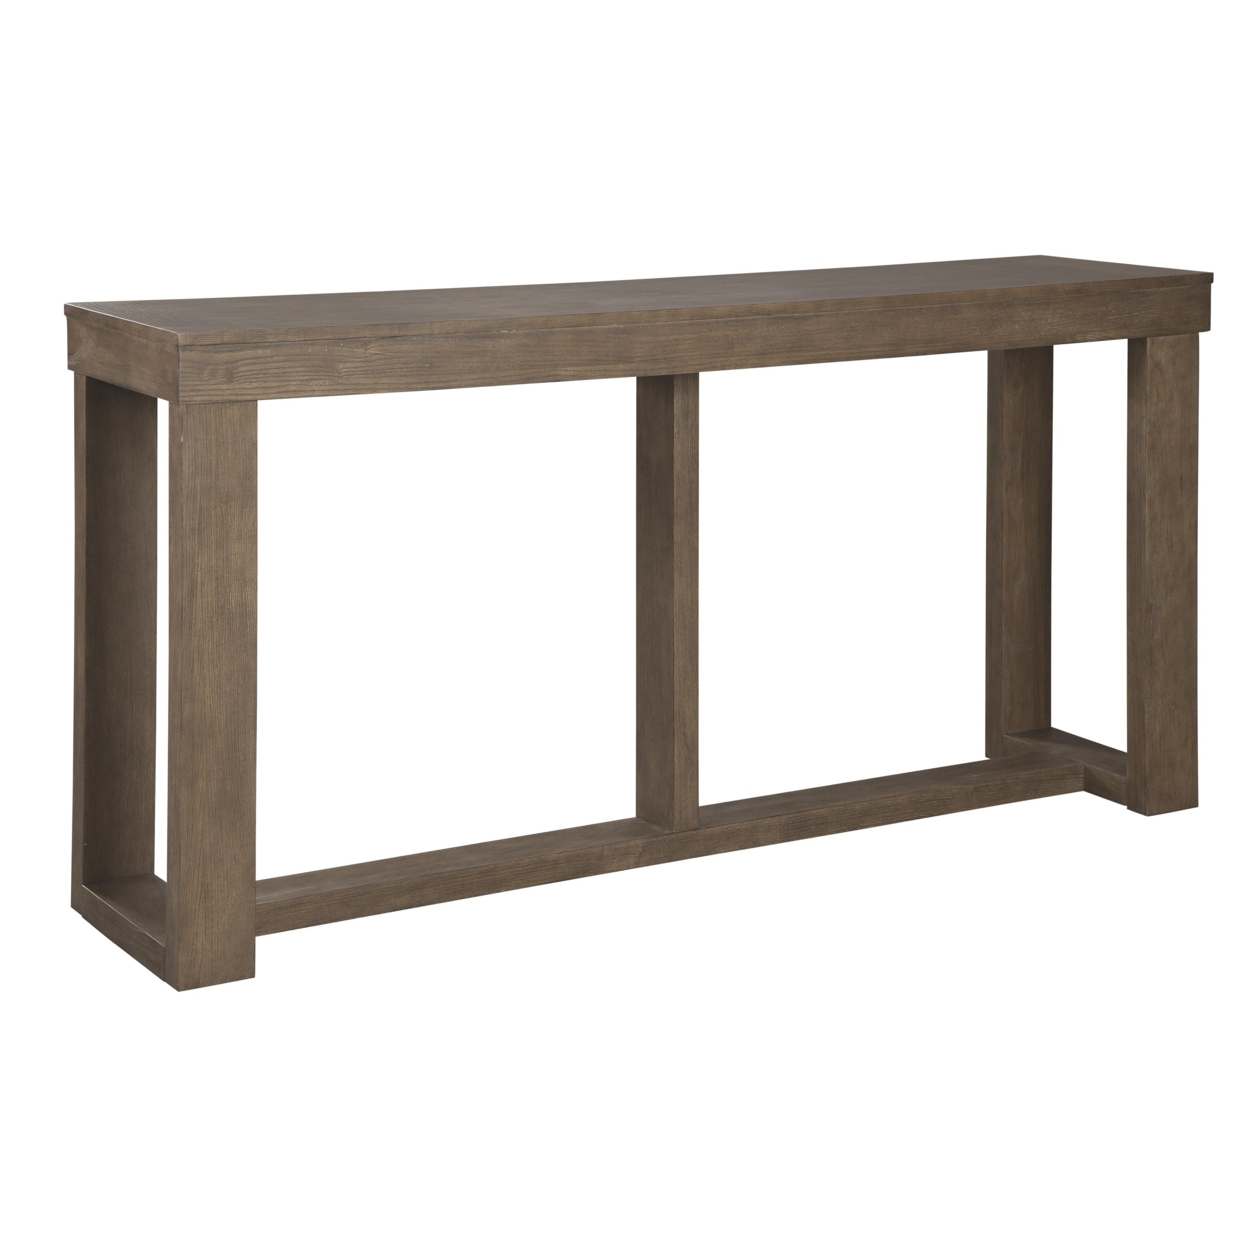 Rectangular Wooden Sofa Table With Sled Base, Light Brown- Saltoro Sherpi